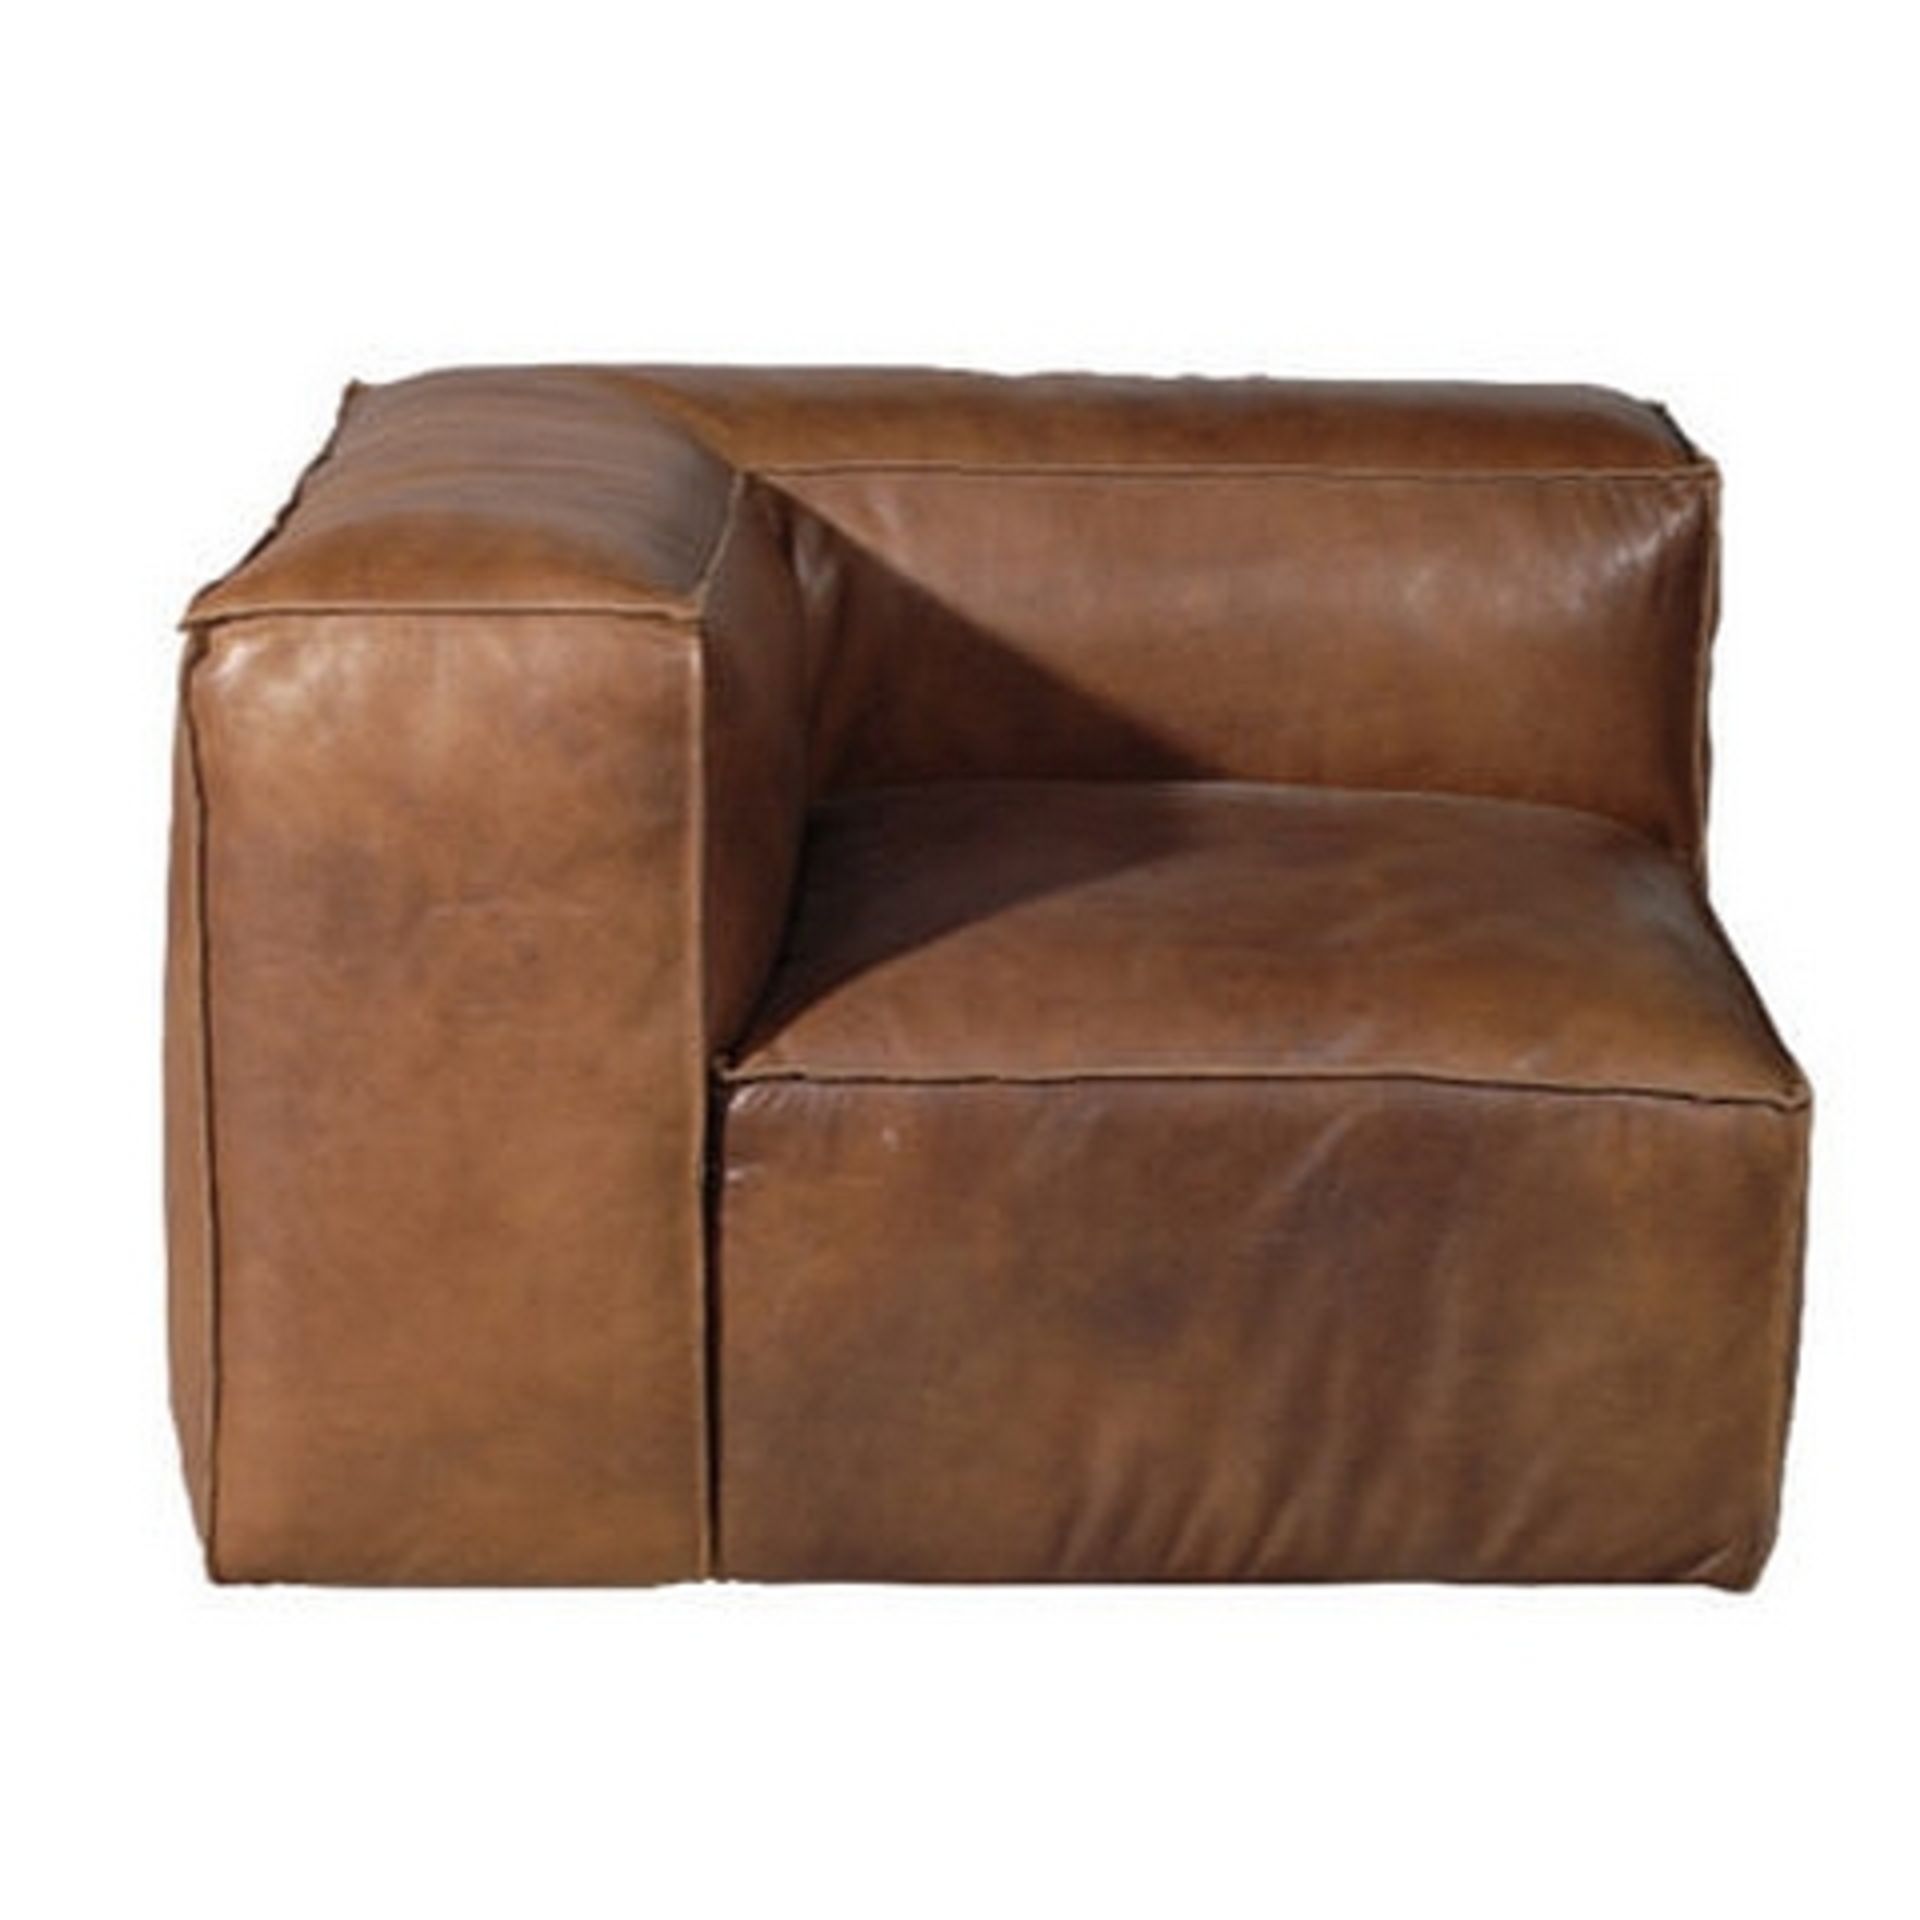 Scruffy Sectional Corner Chair Matador Nuez Leather 120 X 114 X 73cm RRP £2200